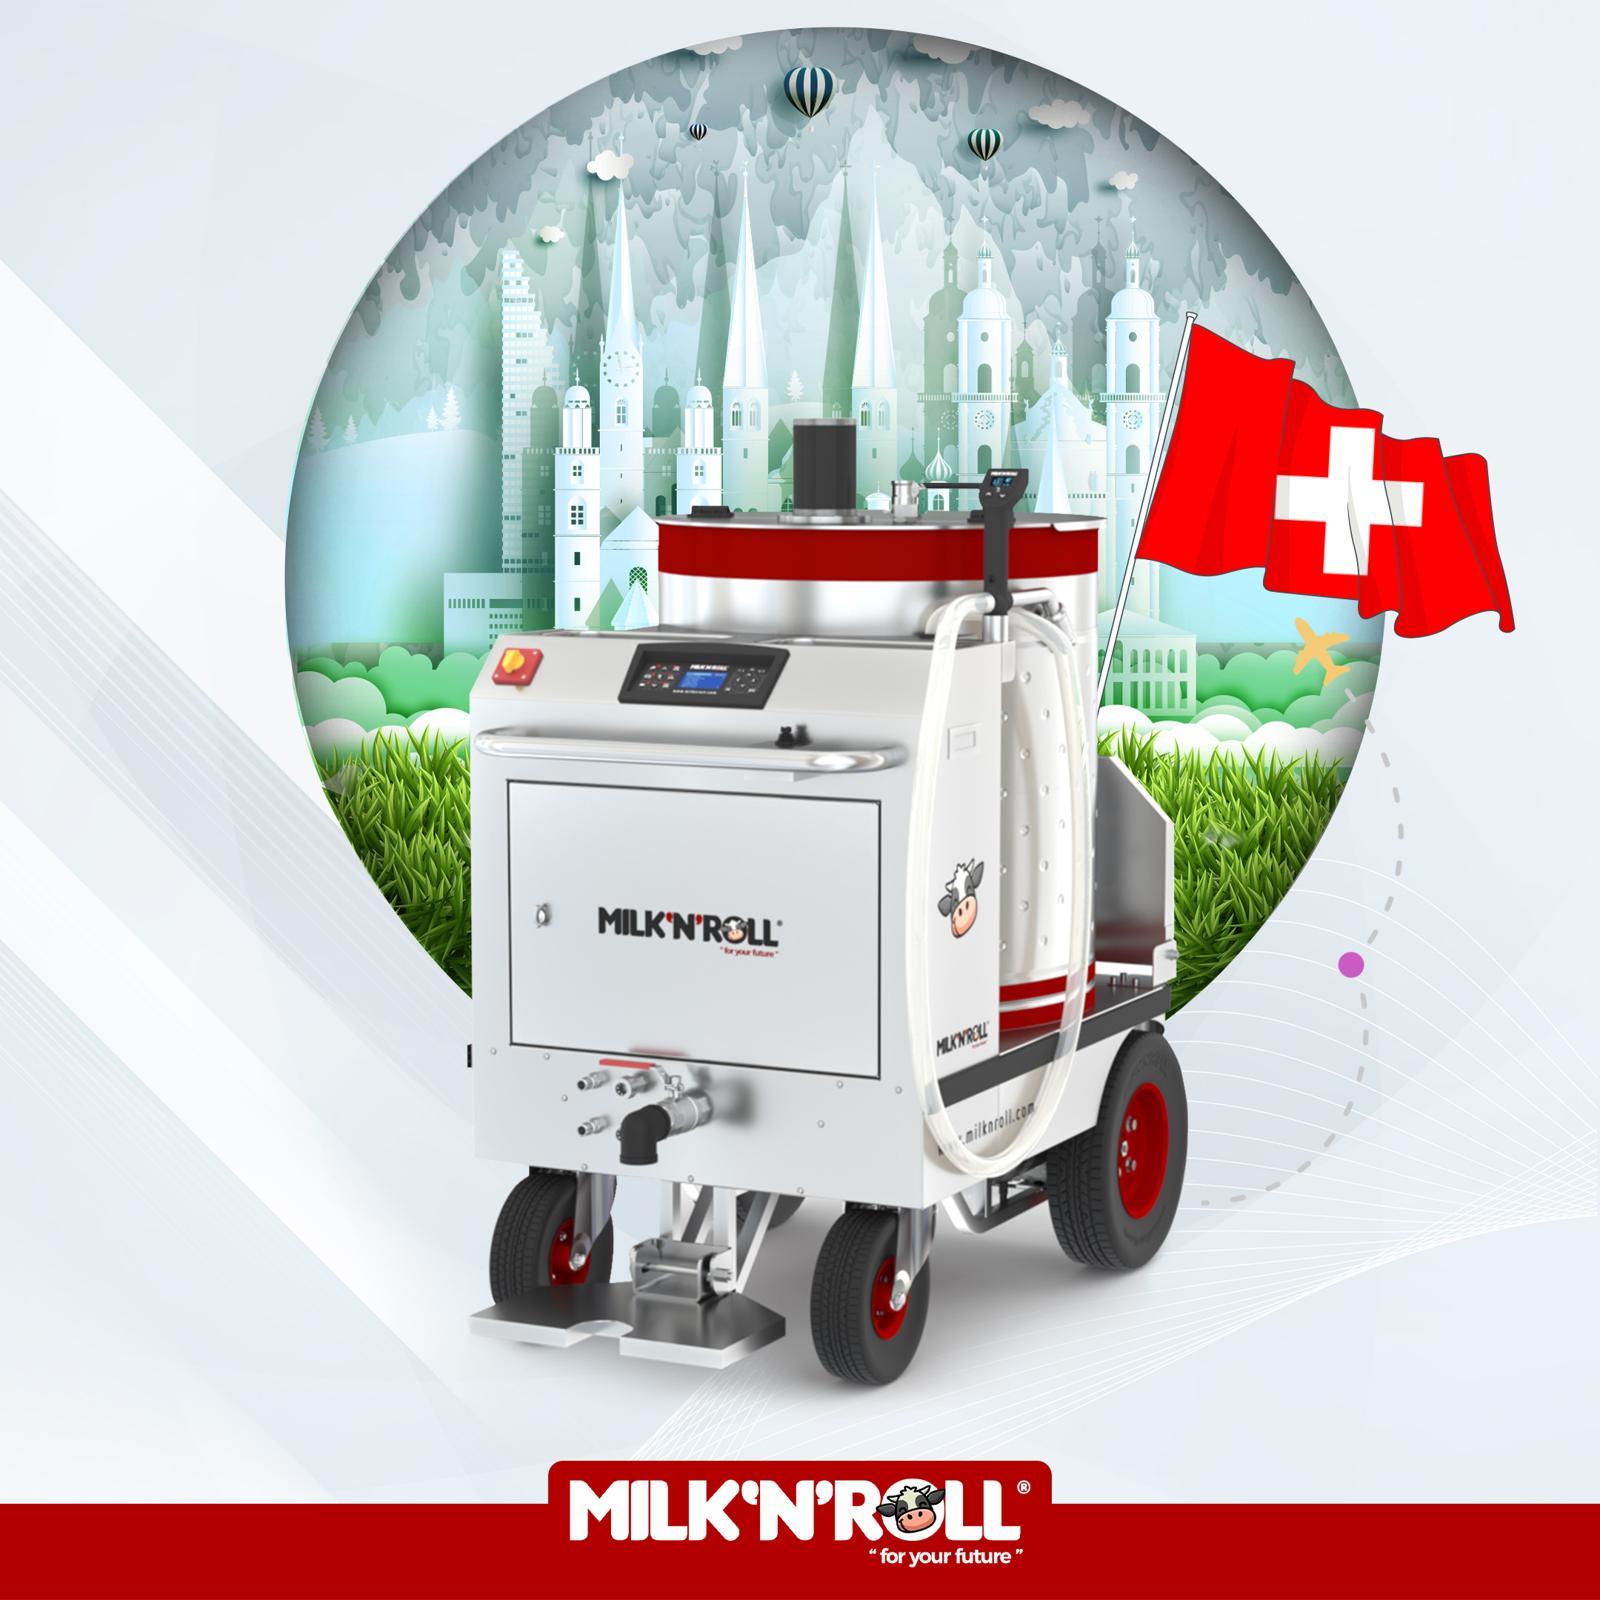 MilknRoll goes to homeland of Heidi, SWITZERLAND